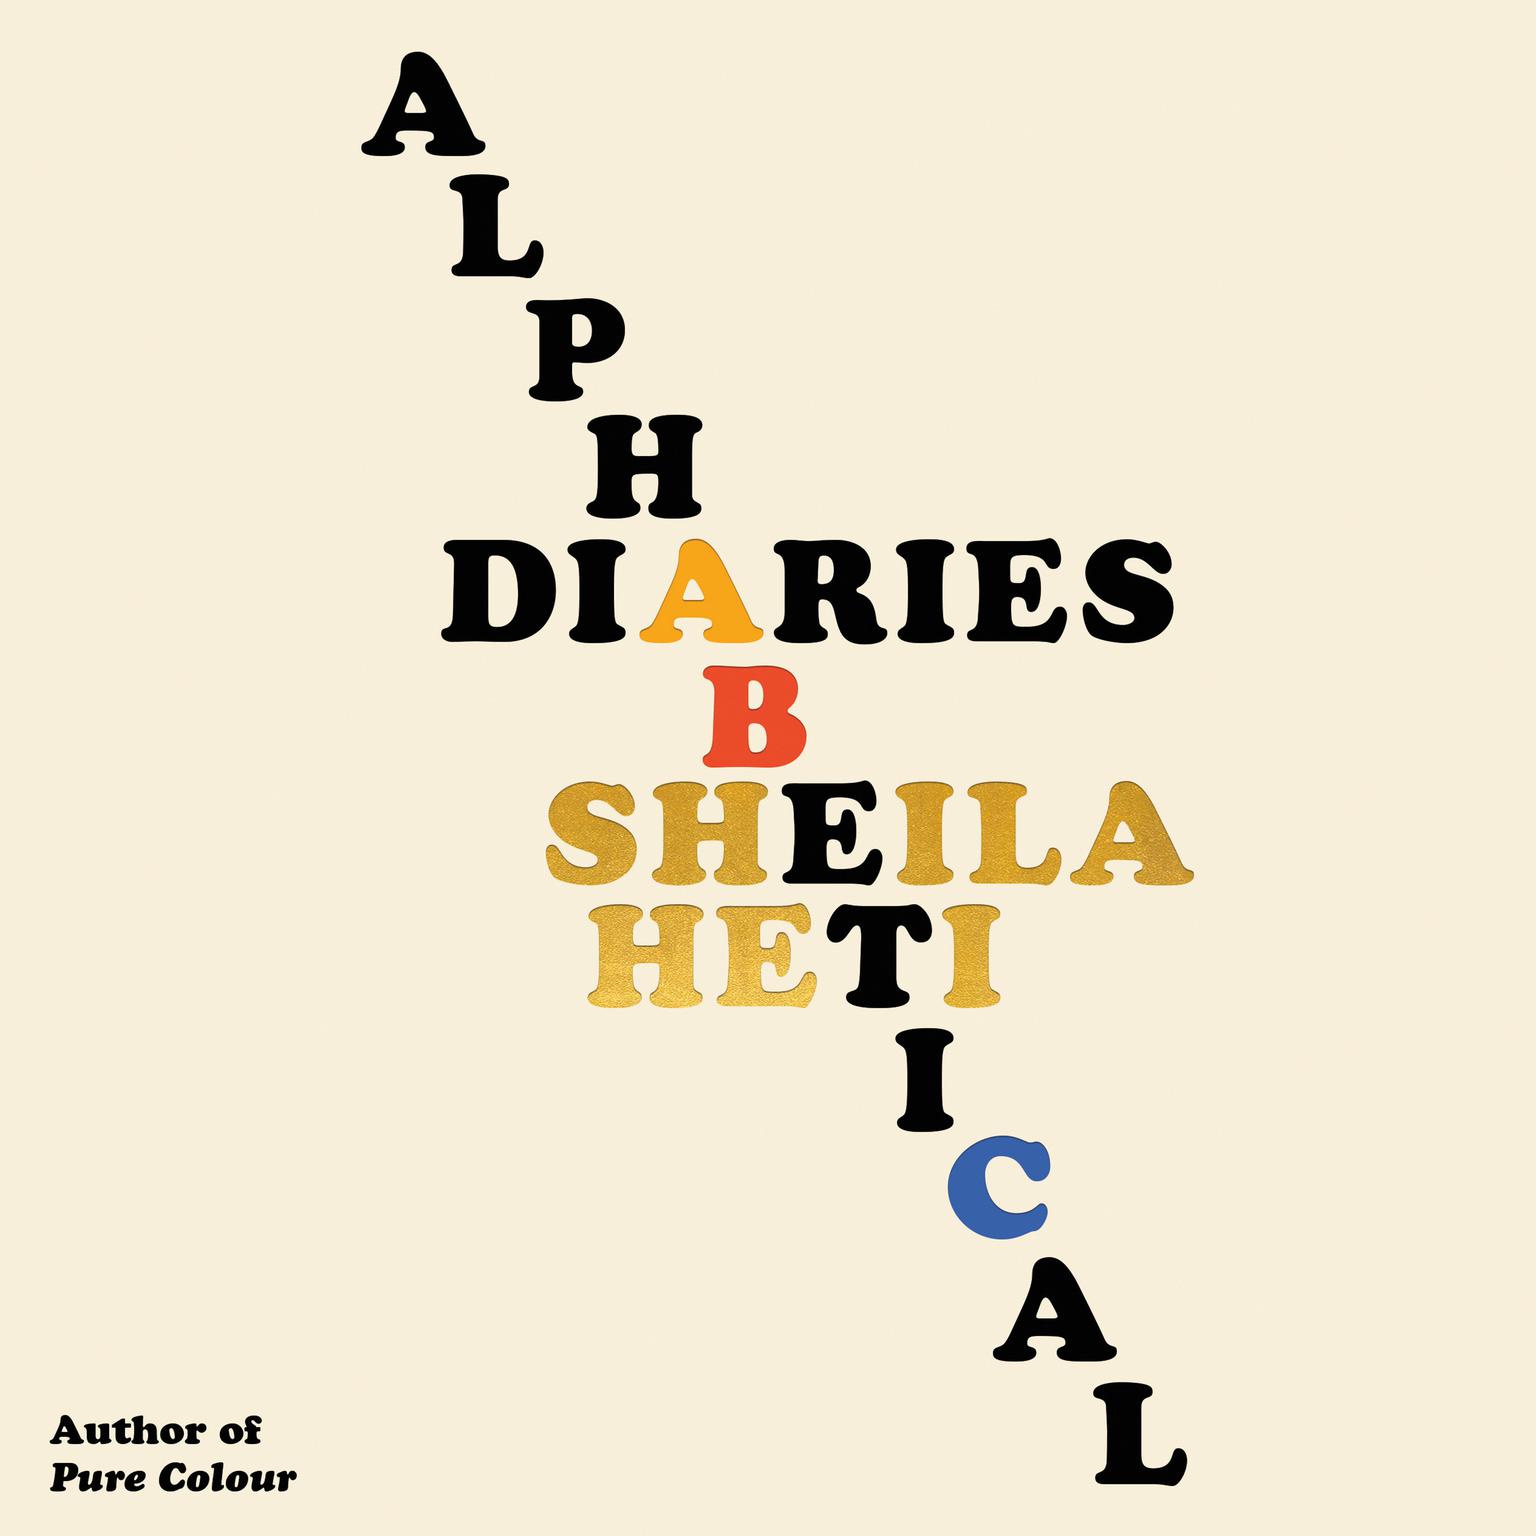 Alphabetical Diaries Audiobook, by Sheila Heti